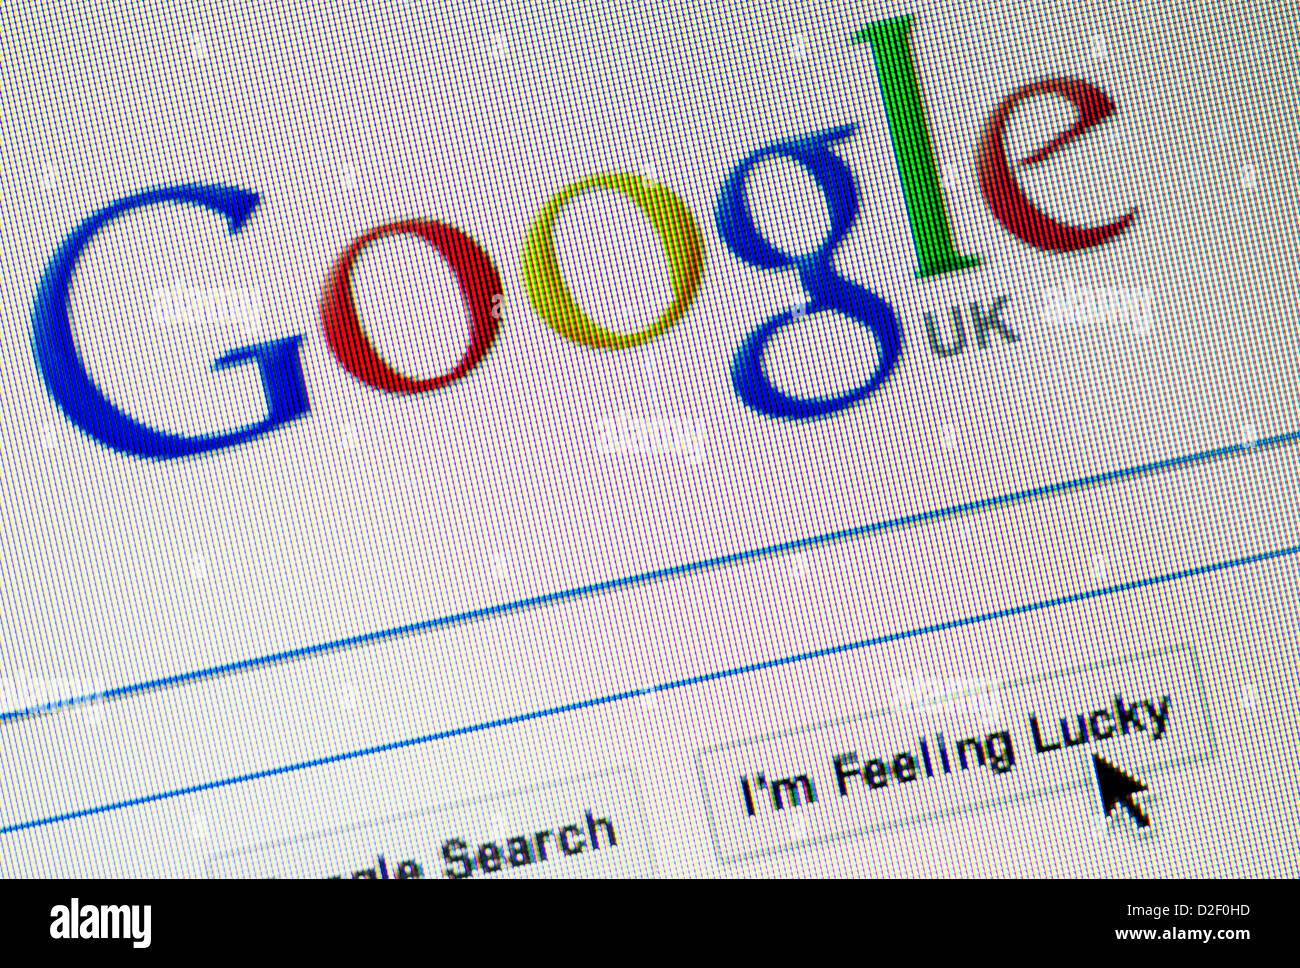 Google logo and website close up Stock Photo